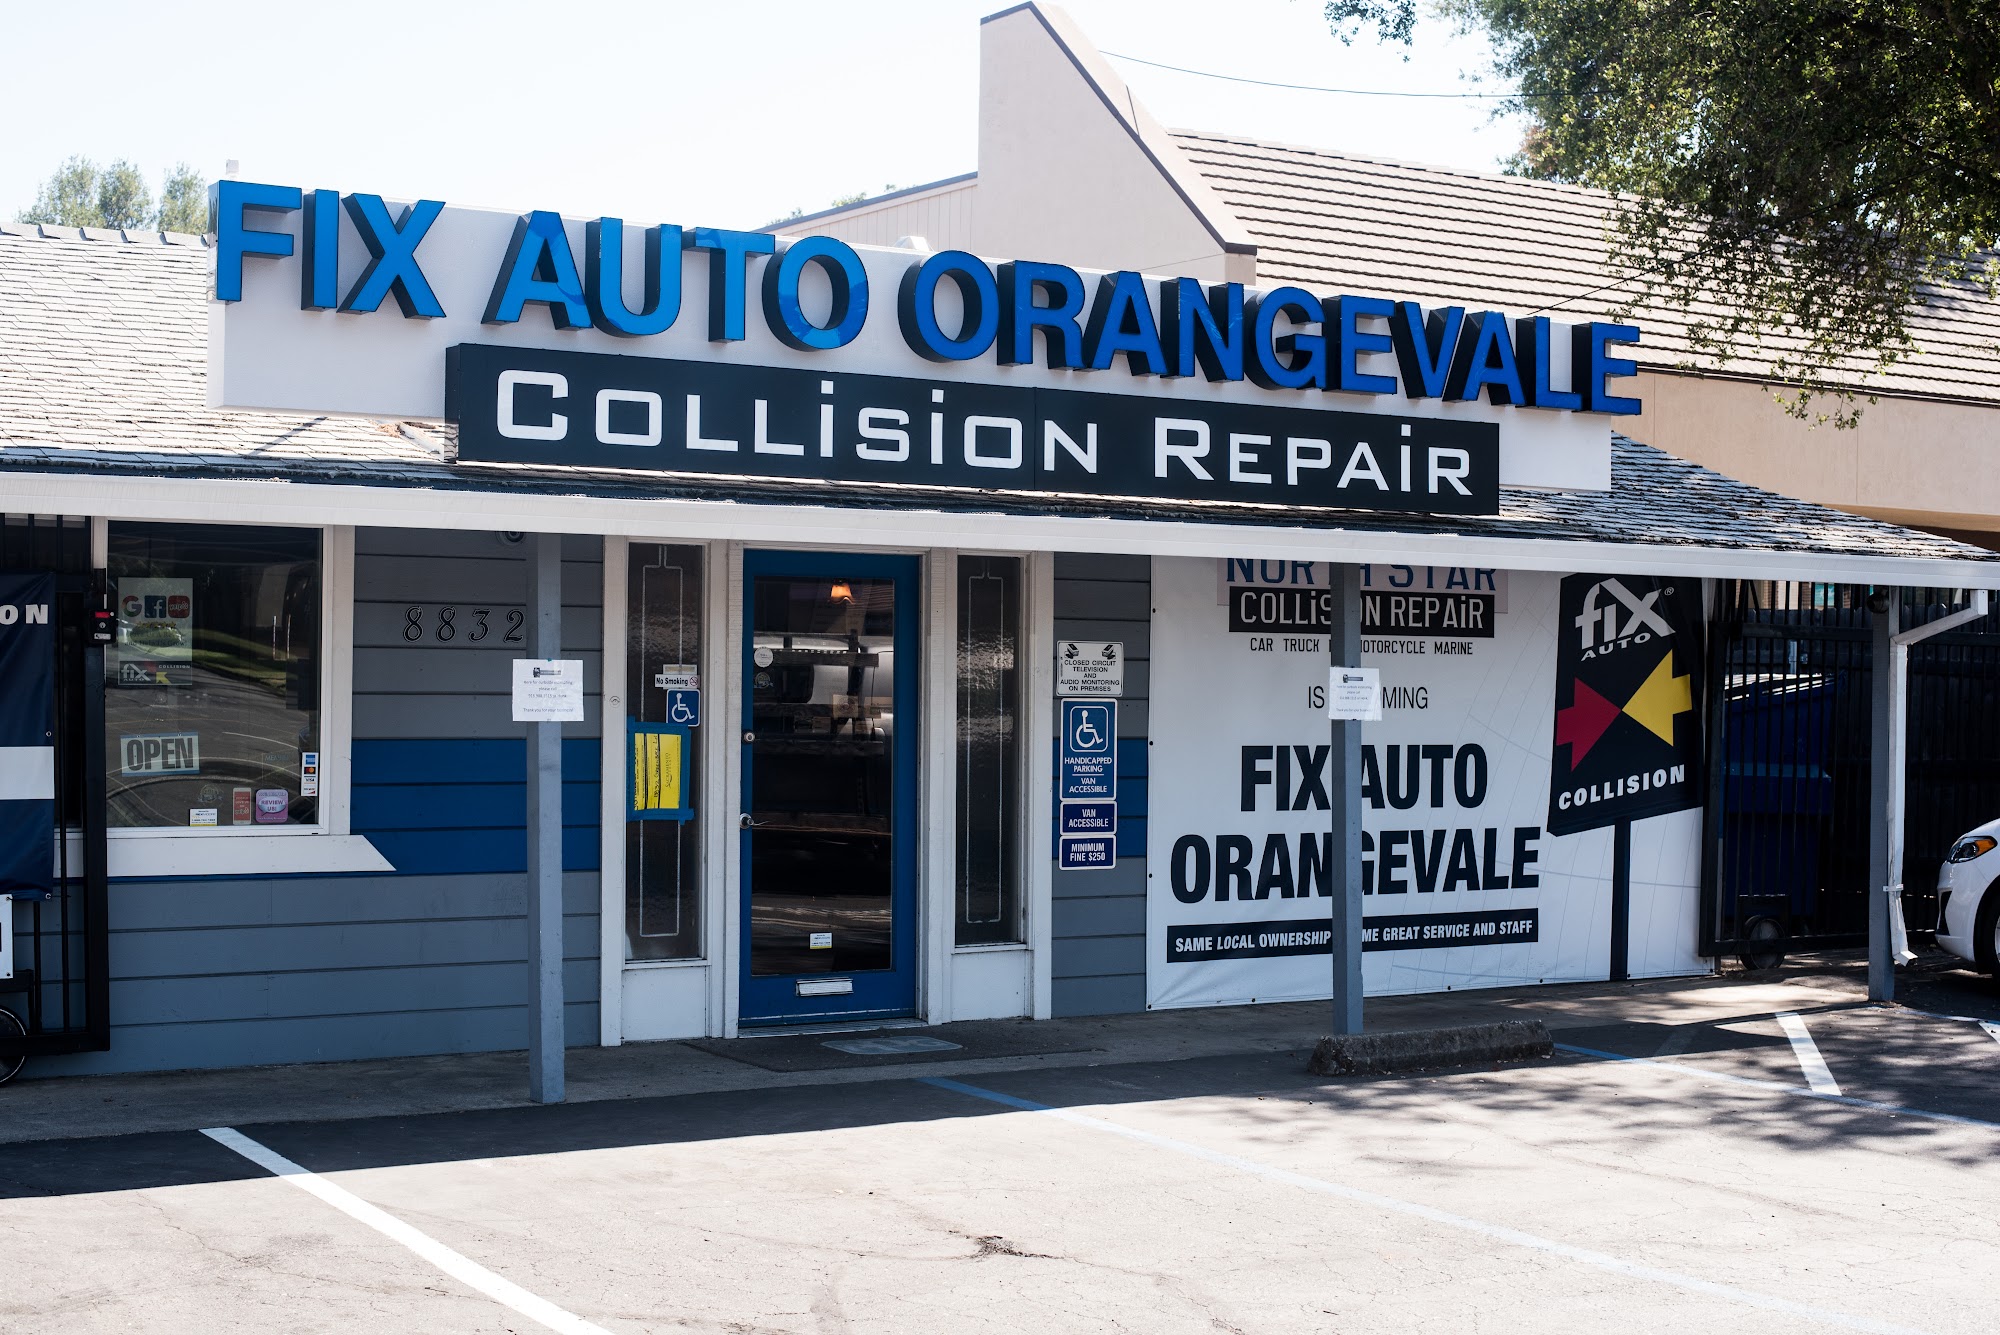 Fix Auto Orangevale